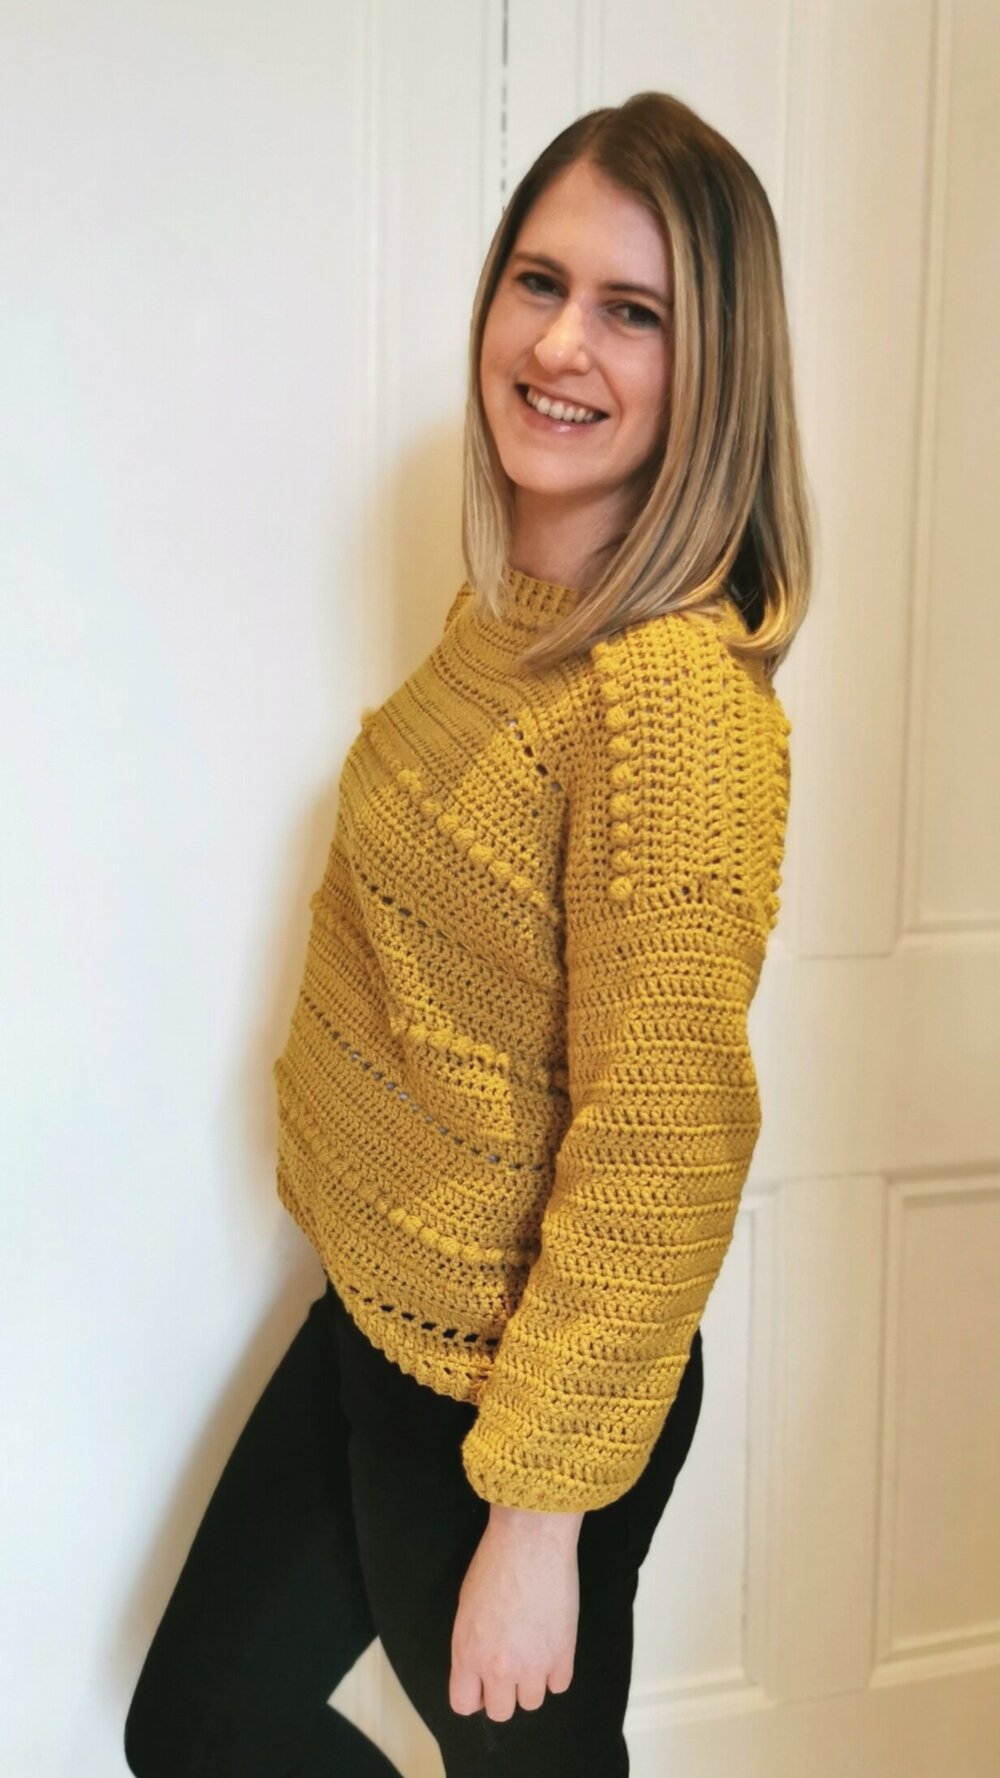 Crocheted jumper: My first garment project! — Cilla Crochets